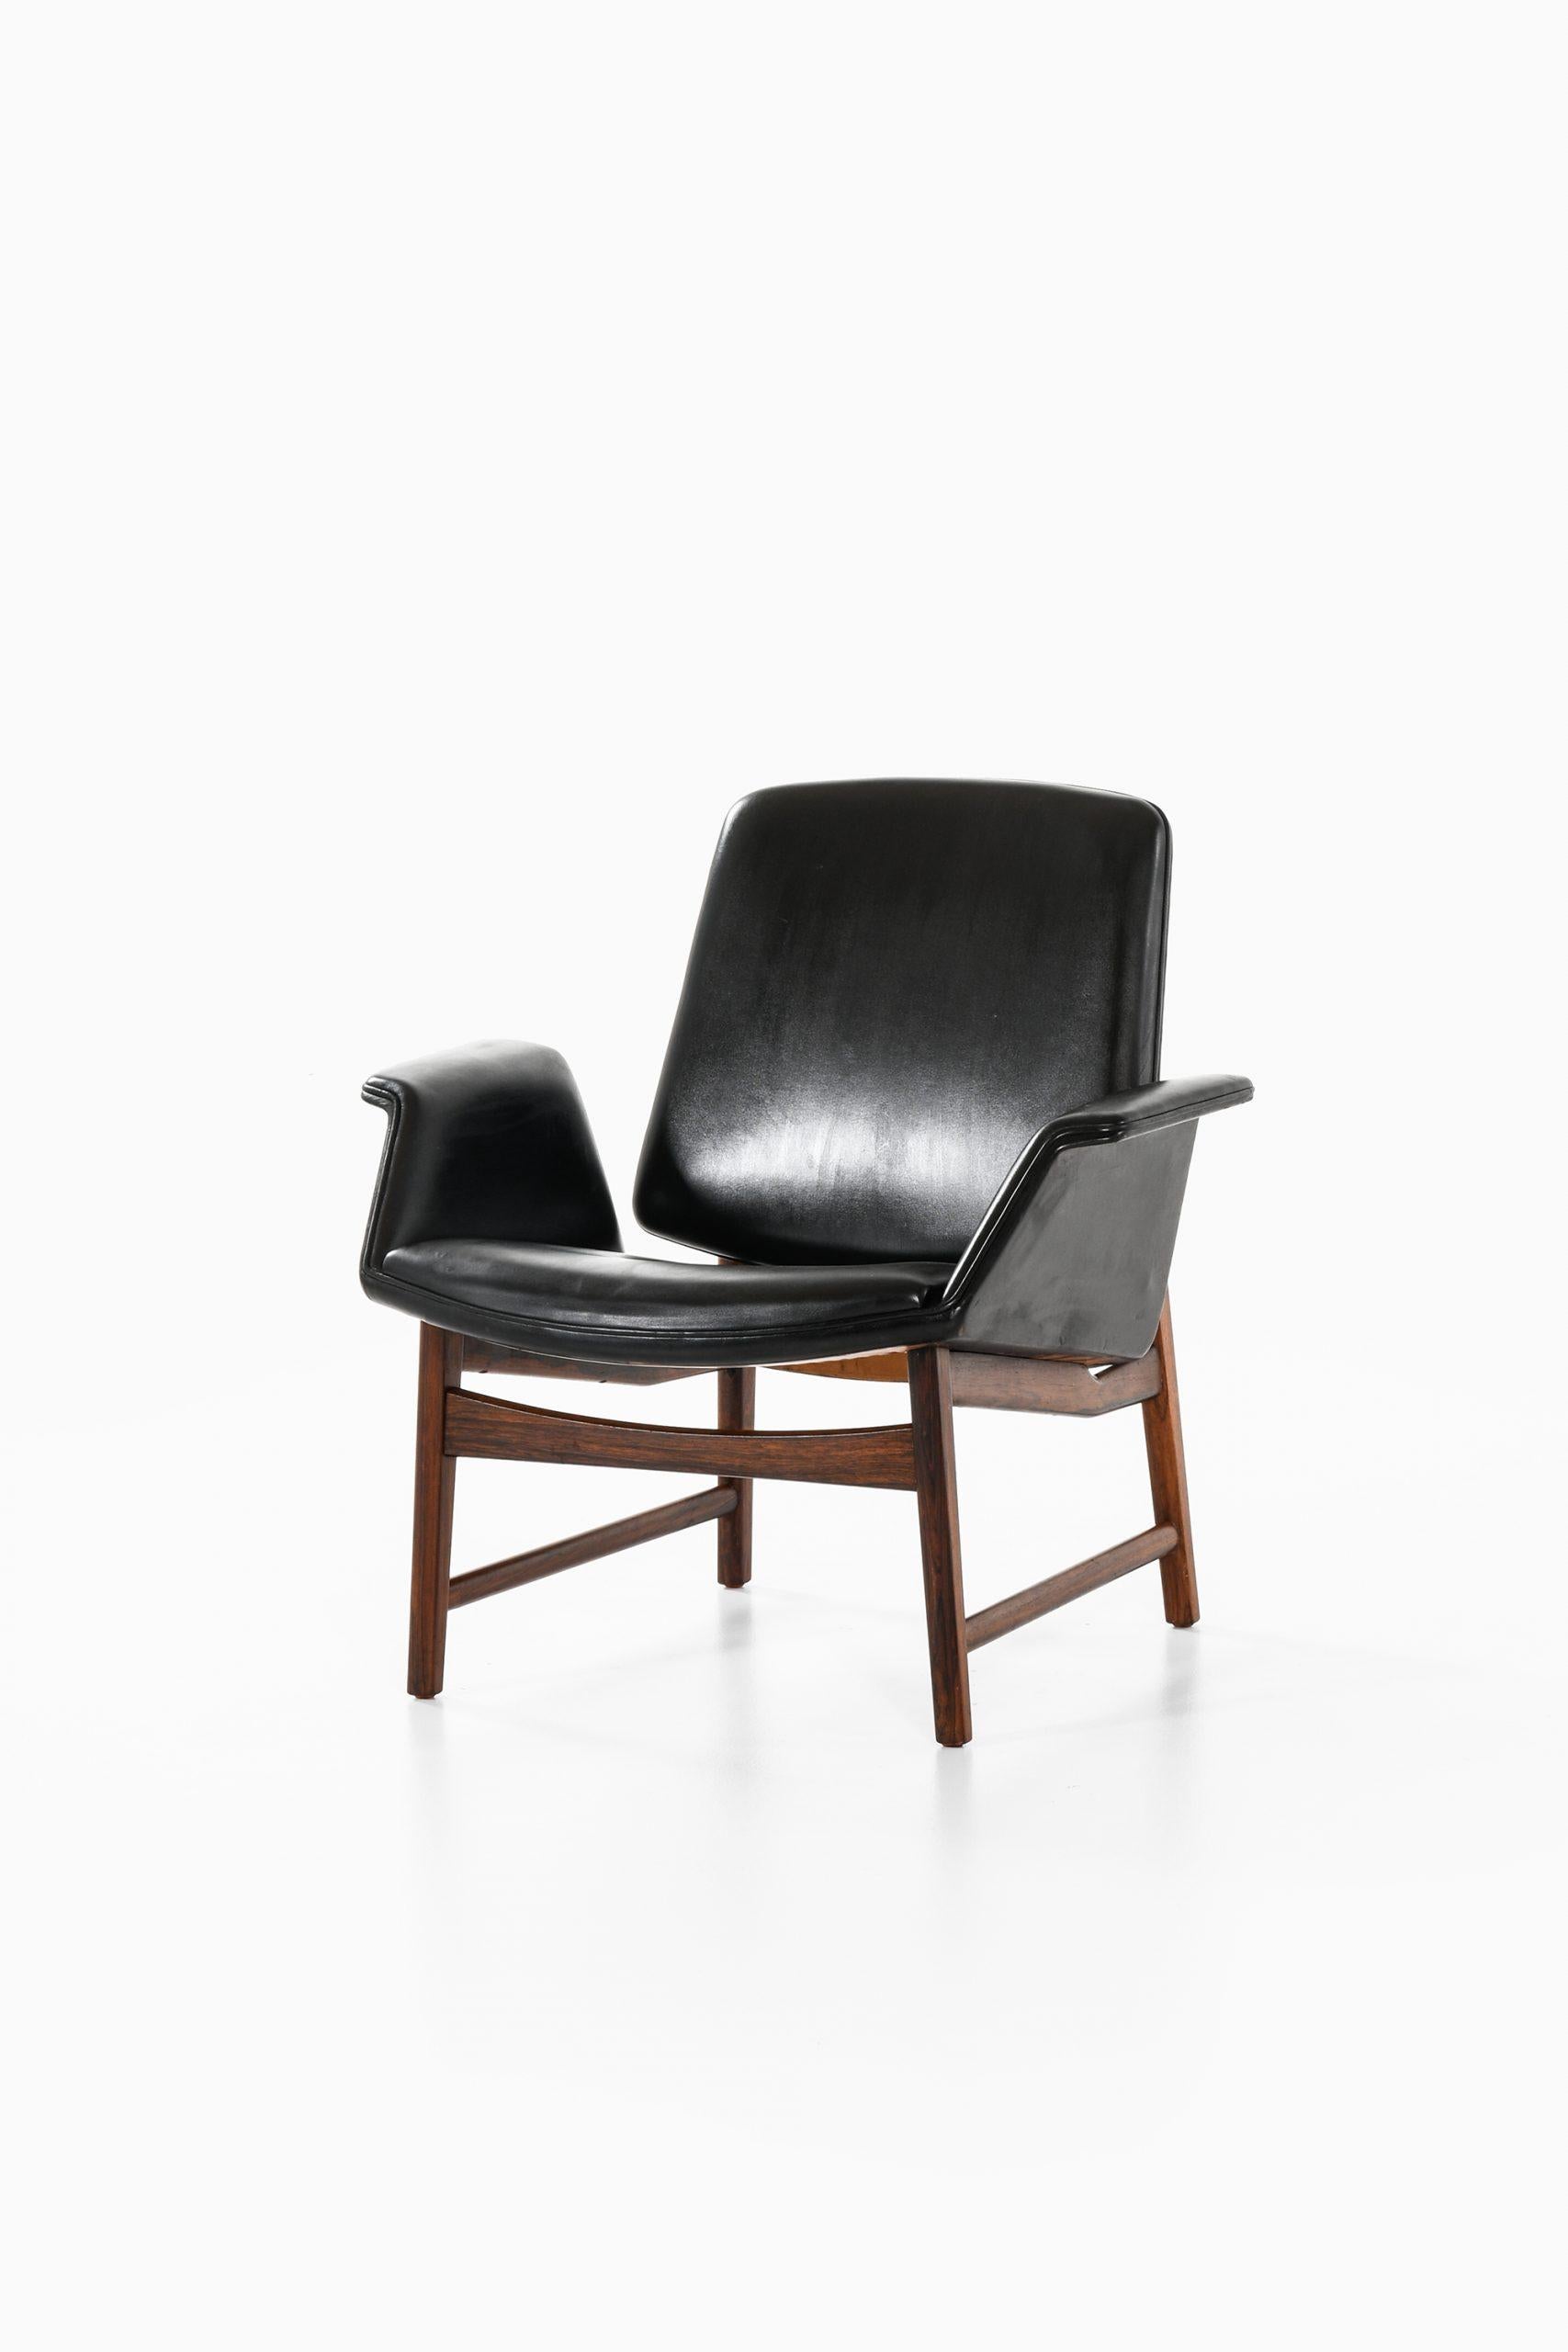 Scandinavian Modern Illum Wikkelsø Easy Chair Model 451 by Aarhus Polstrermøbelfabrik in Denmark For Sale